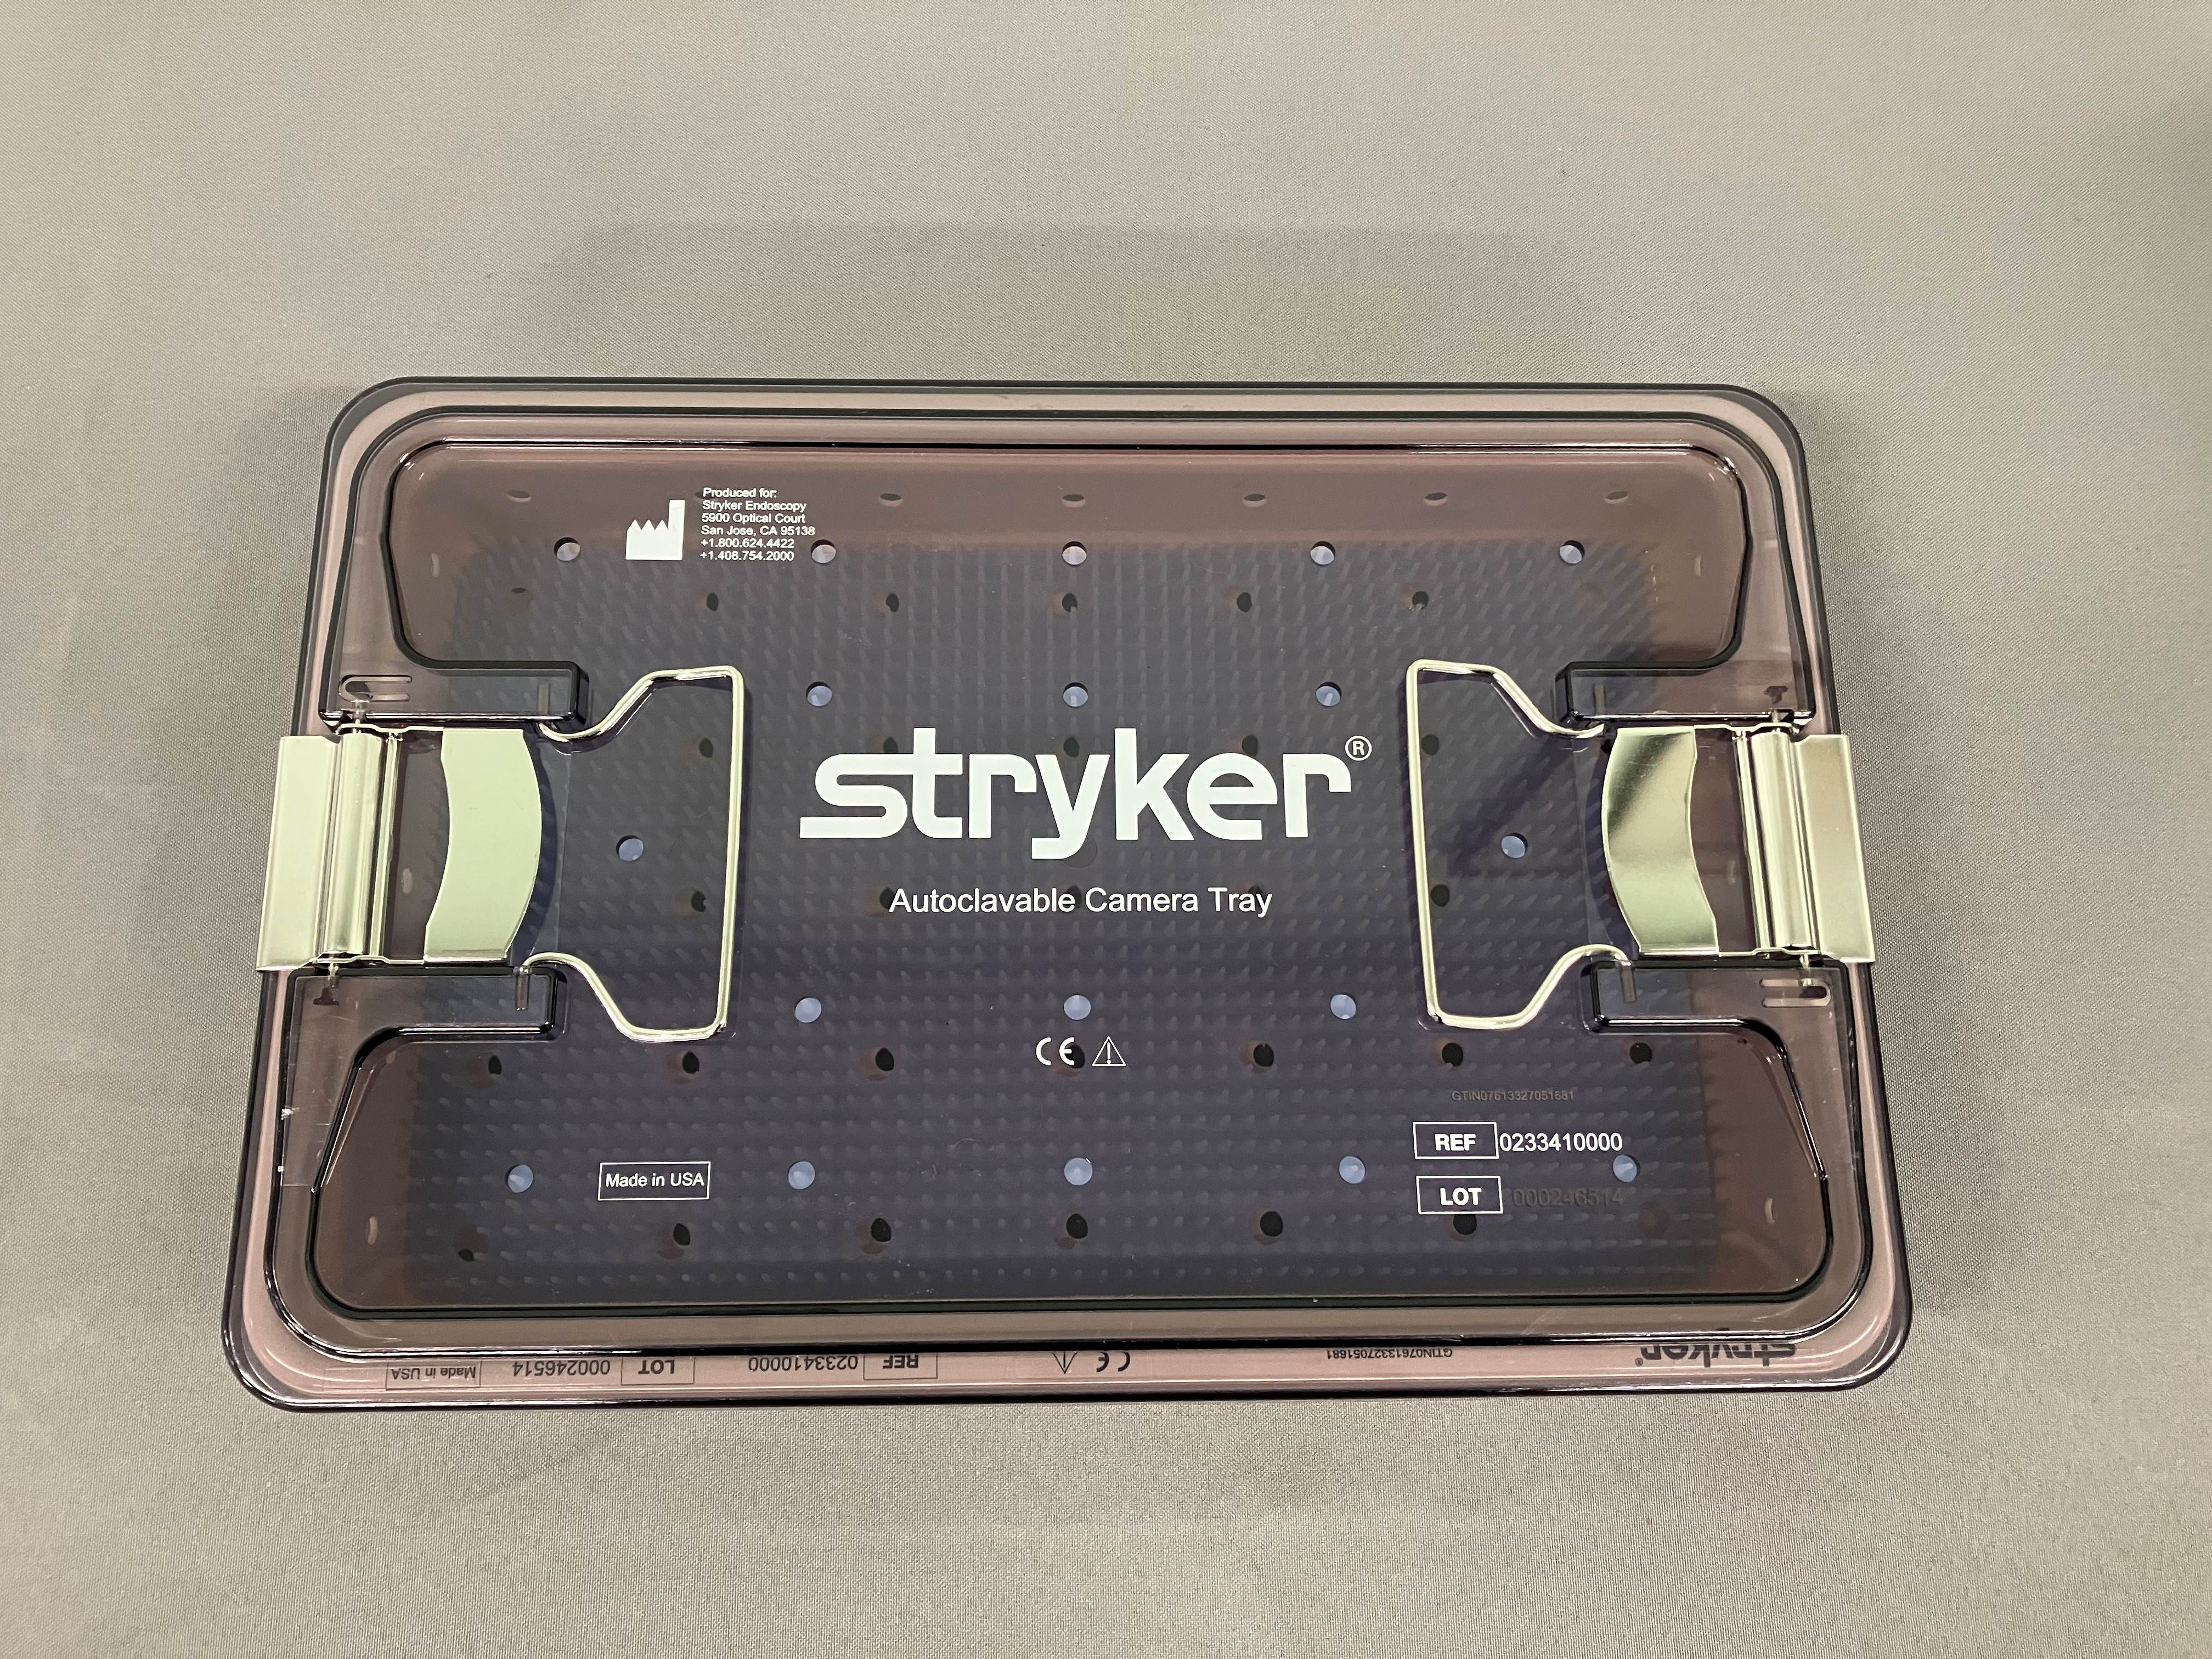 Stryker Autoclavable Camera Tray â€“ no instruments